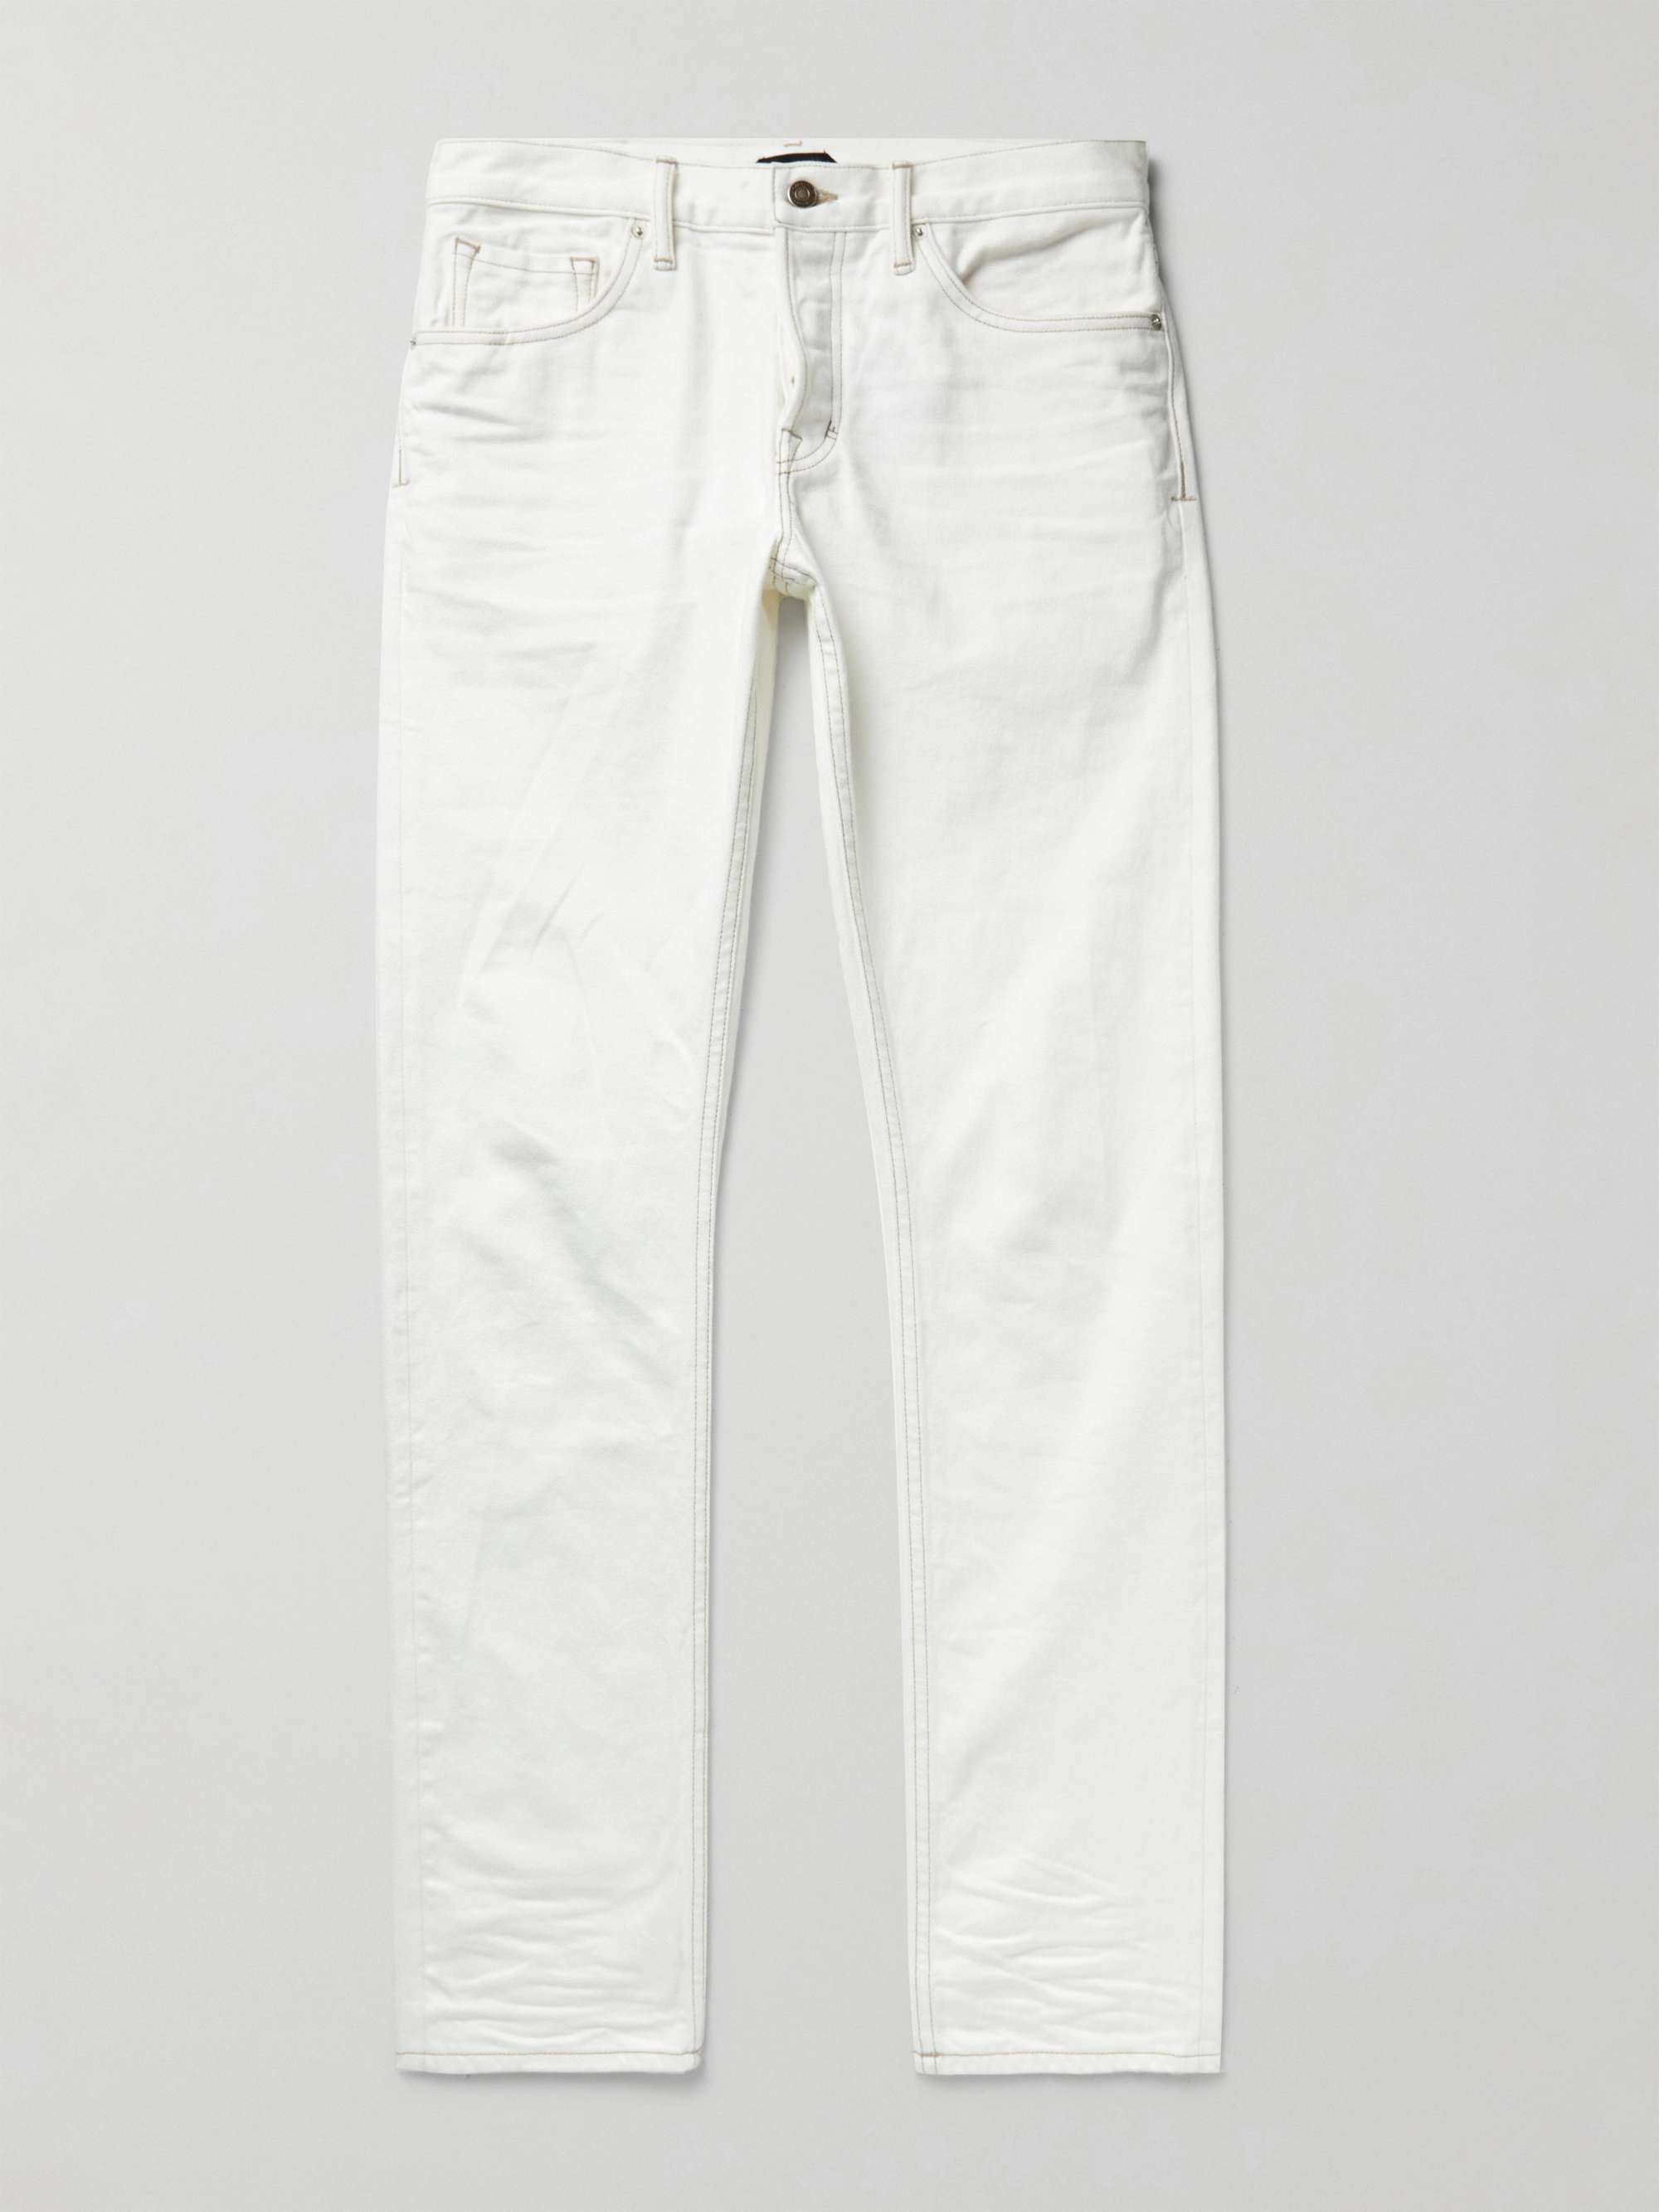 TOM FORD Slim-Fit Garment-Washed Selvedge Jeans